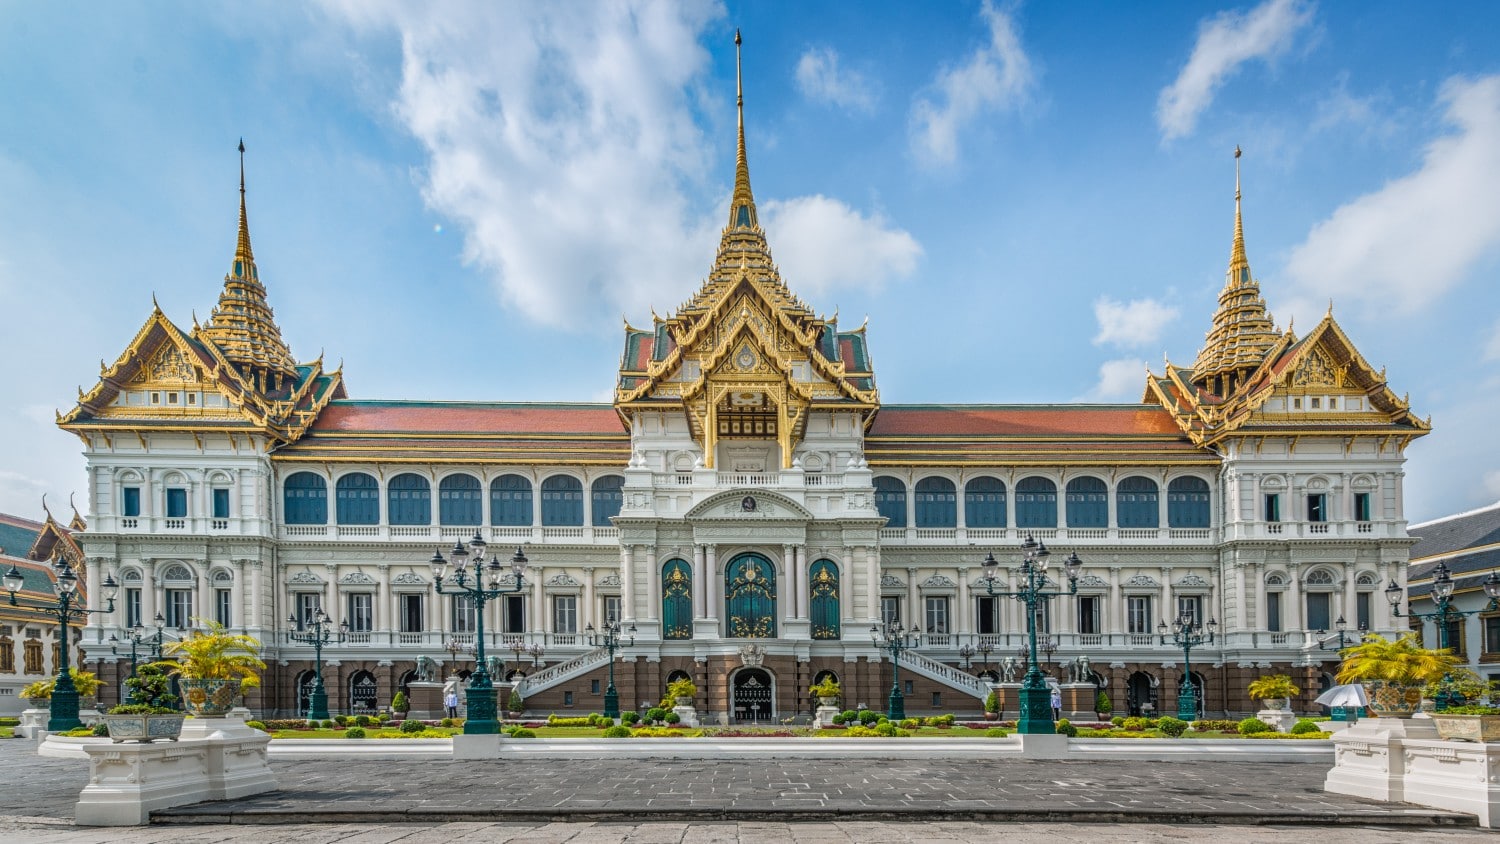 Grand Palace, Bankok Dört harika Güneydoğu Asya seyahat programı I Fotoğrafçılık I Seyahat Programı I Manzara I Yemek I Mimarlık I Laos I Tayland I Kamboçya I Myanmar I Malezya I Vietnam.  Seyahat rehberinin tamamını şimdi okuyun #seyahat #backpacking